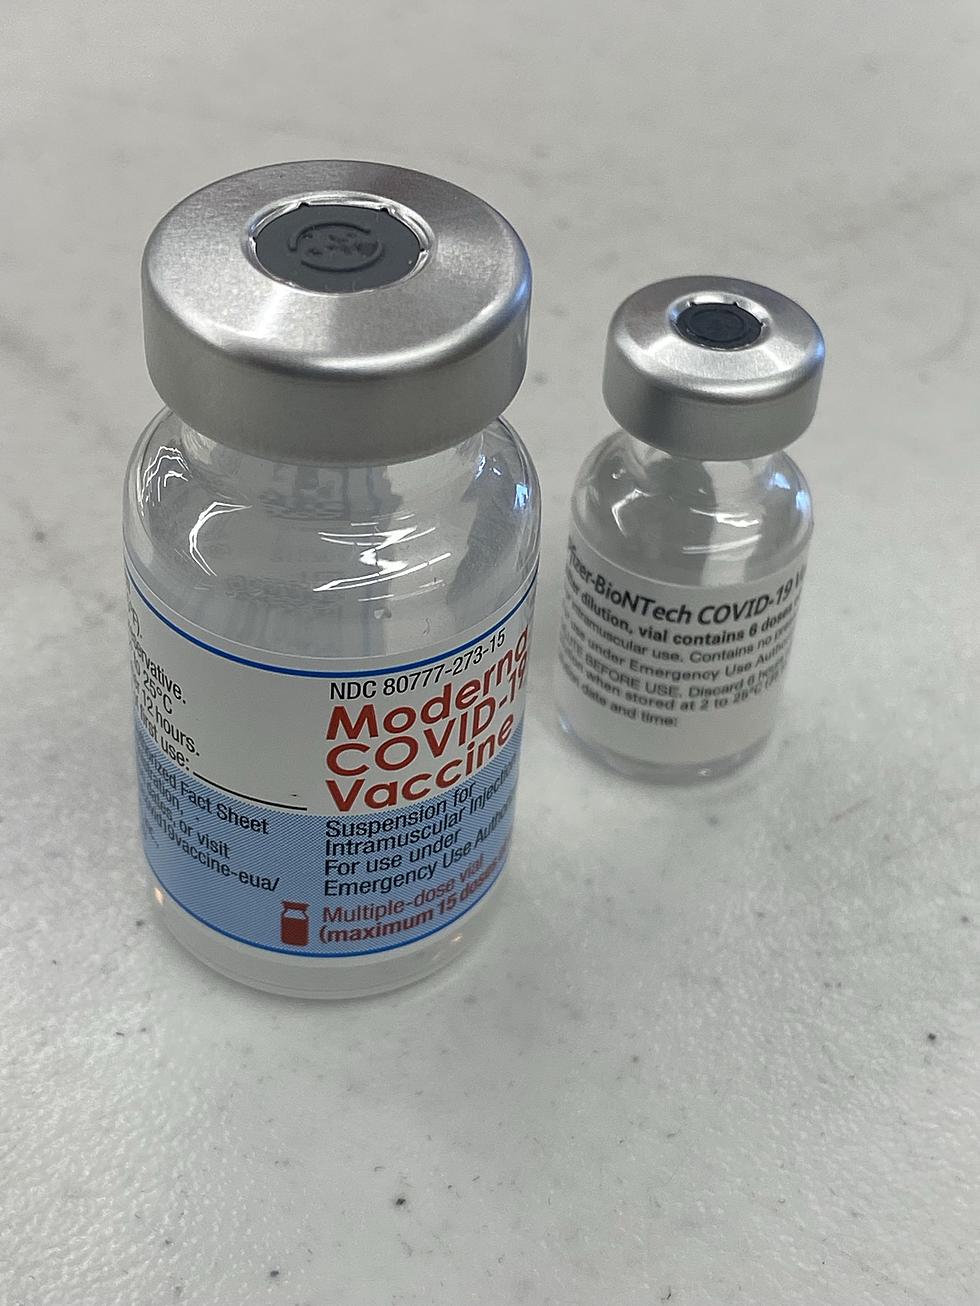 MDI Hospital Offering 2 COVID Vaccine Clinics in April